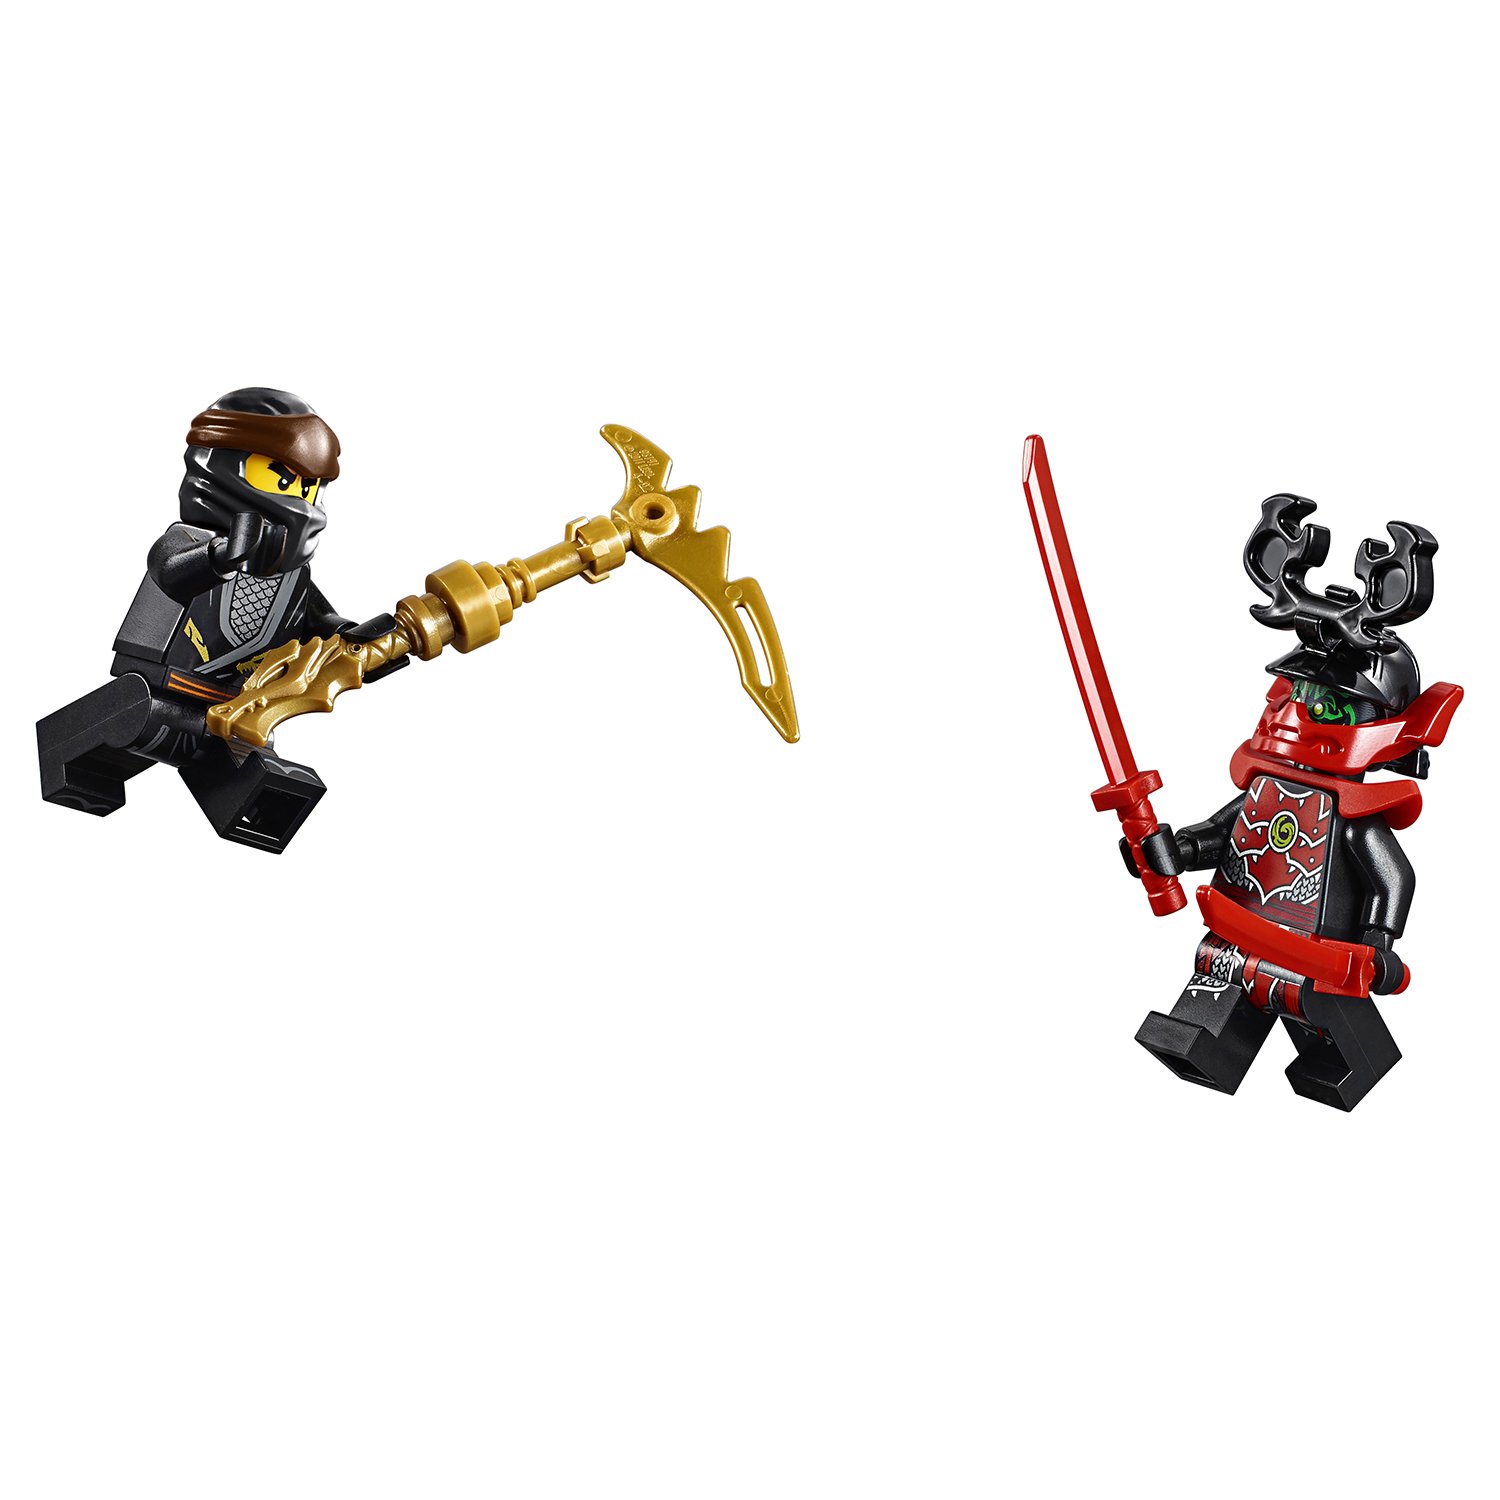 Lego Ninjago 70669 Земляной бур Коула